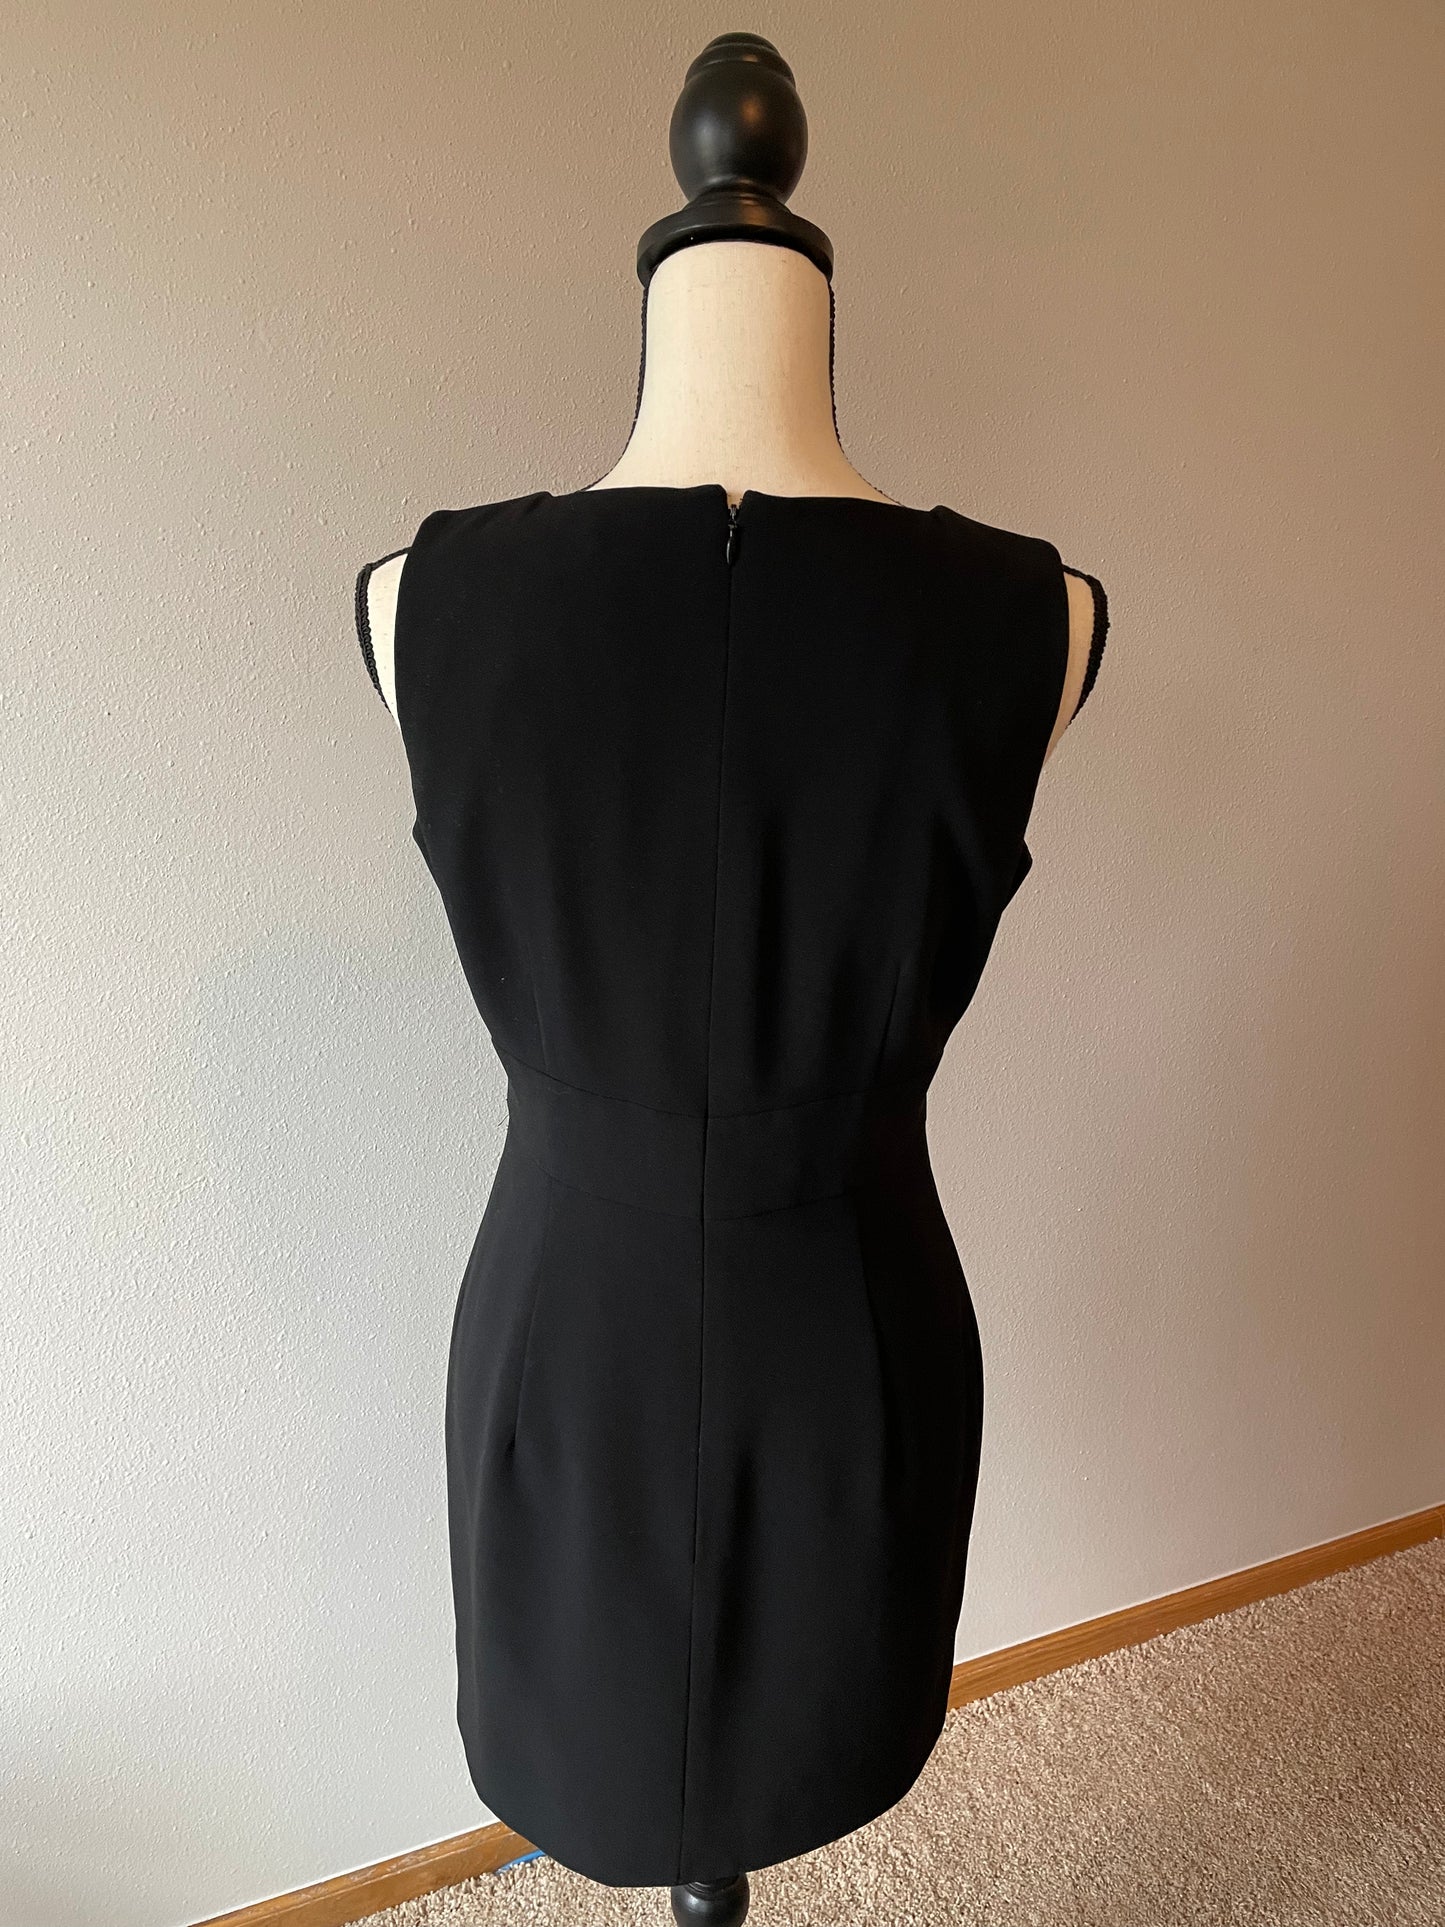 Ann Taylor Black Tailored Dress (6)